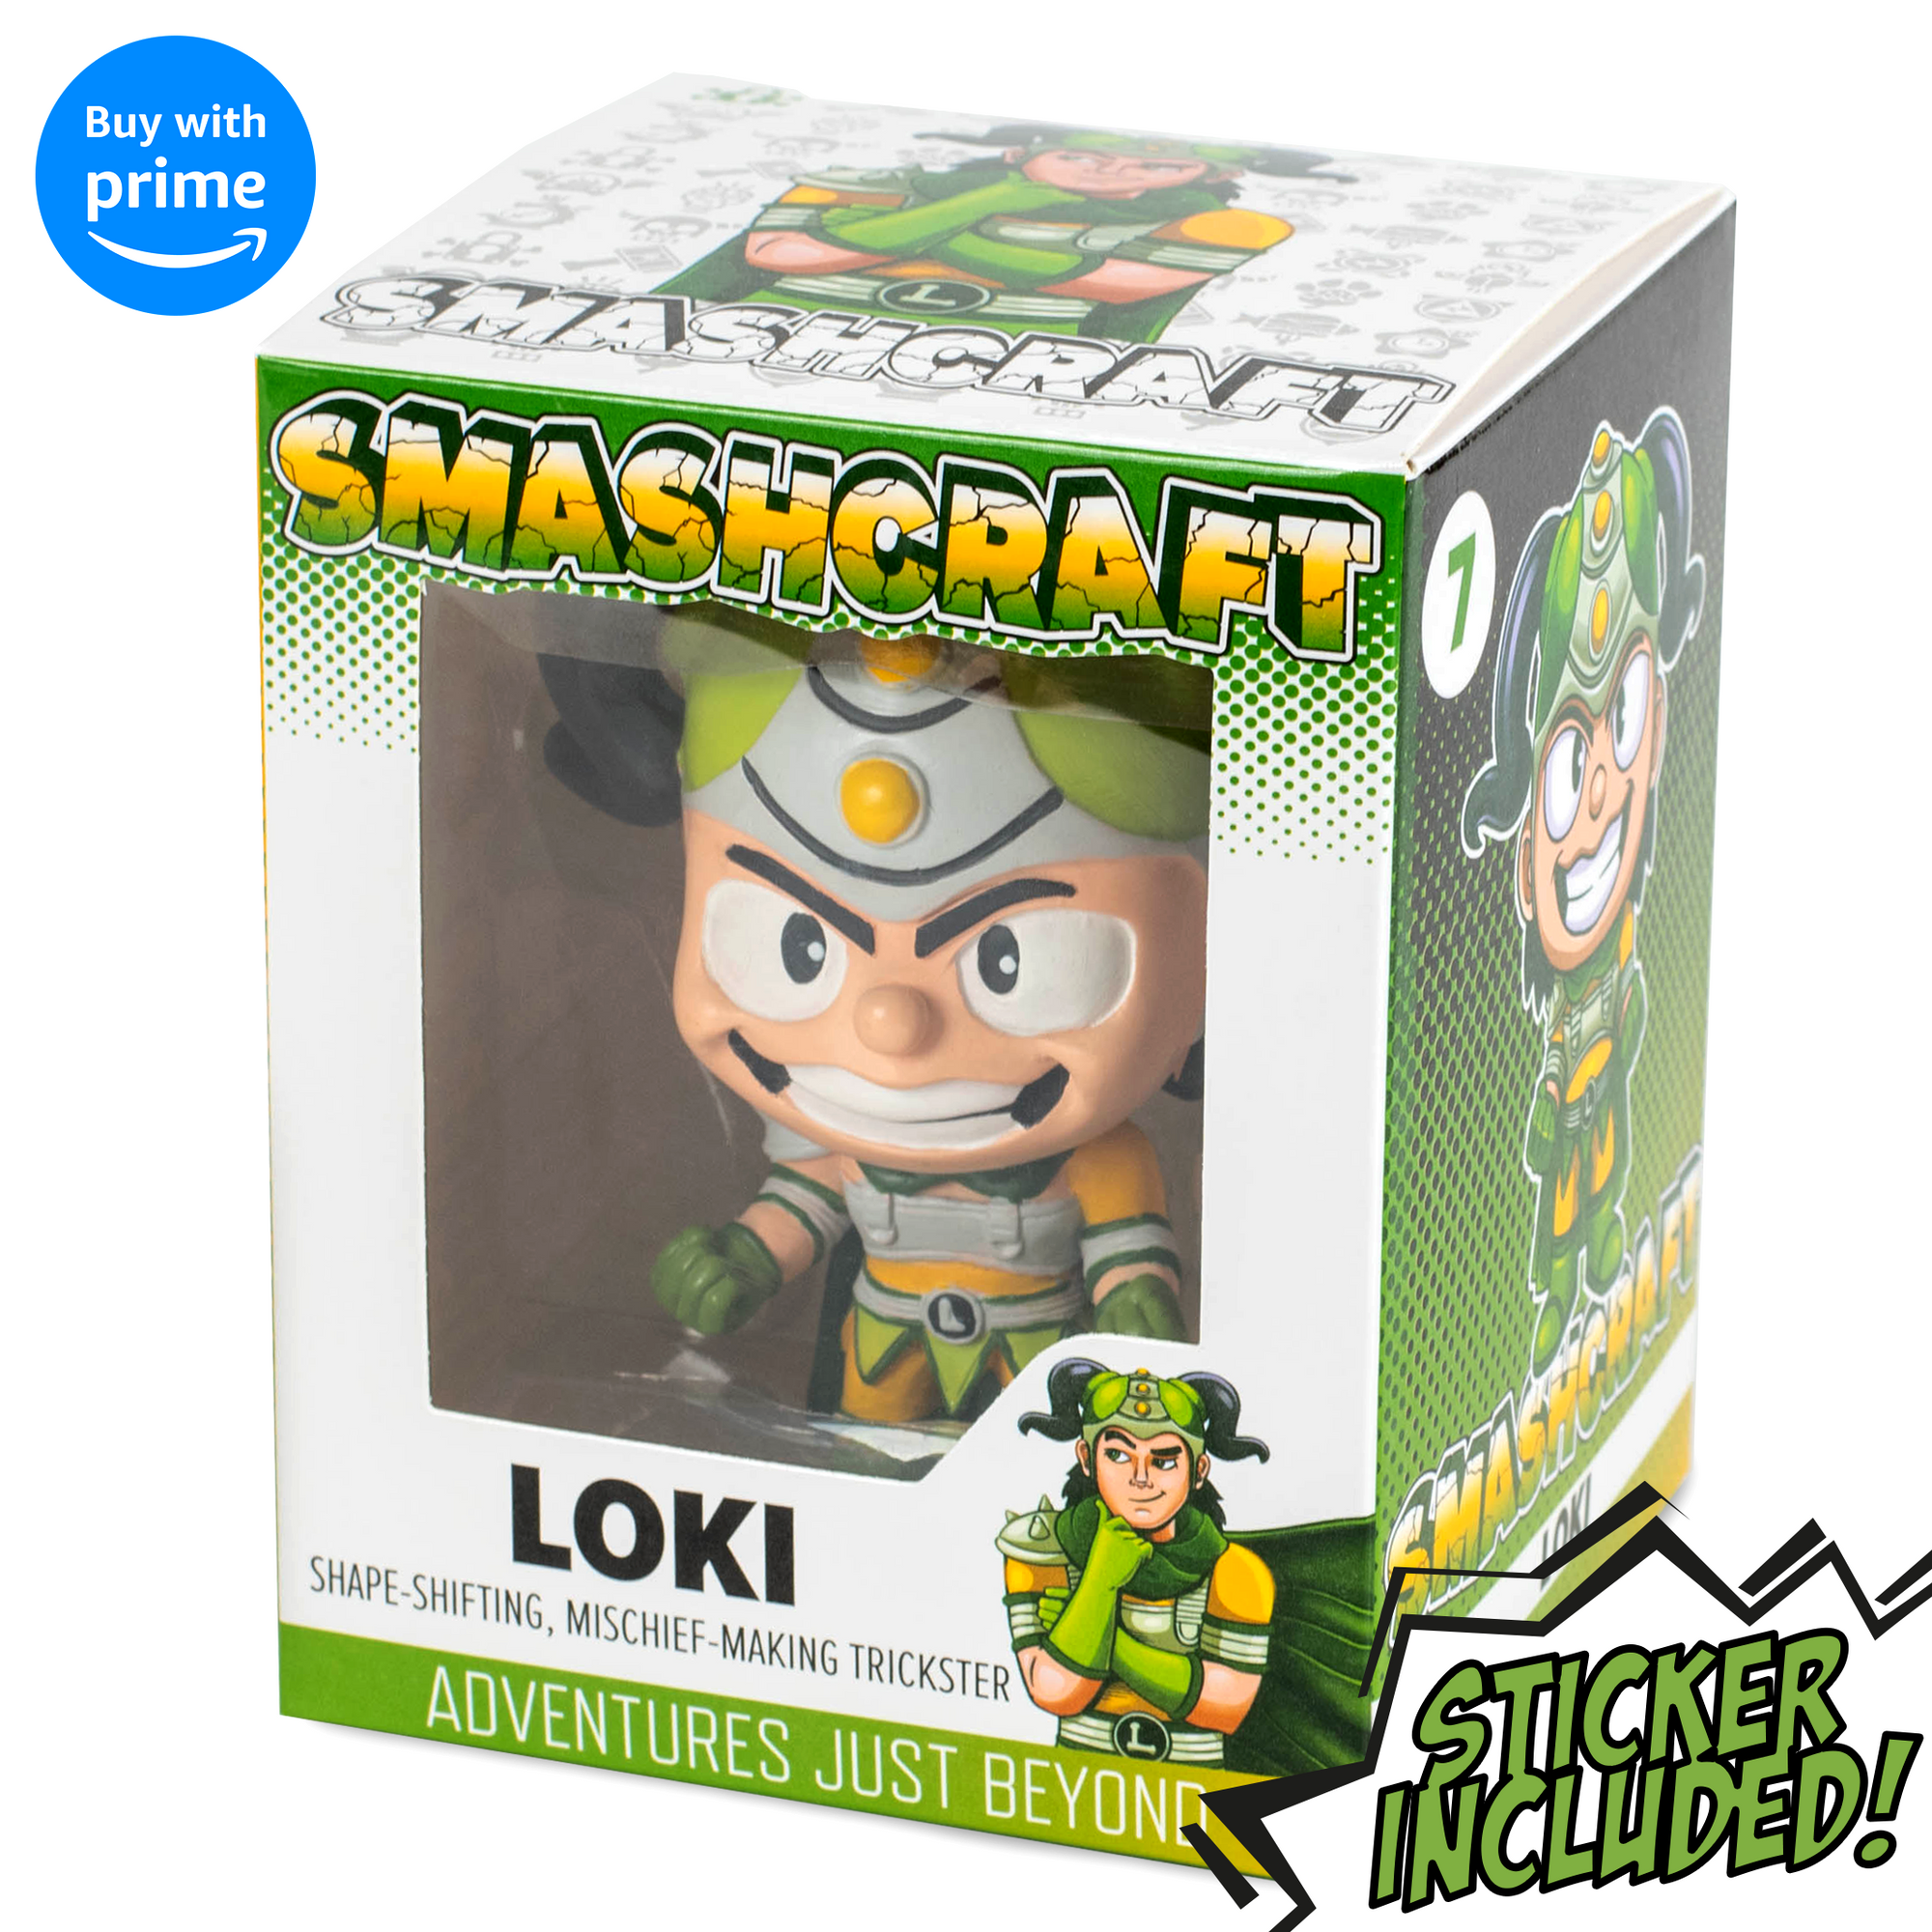 Smashcraft Loki collectors box, with back story and memorabilia norse mythology character sticker